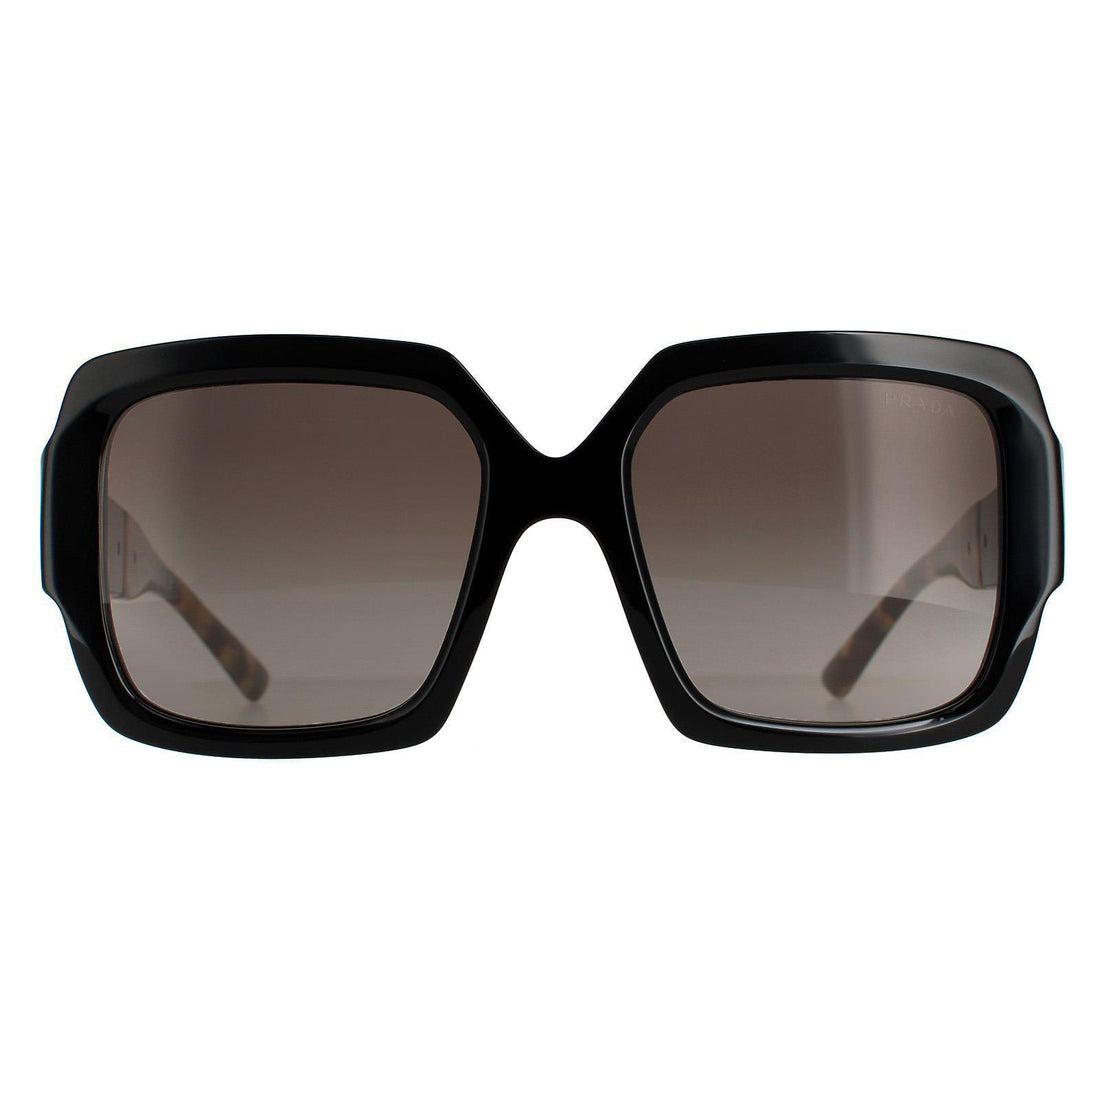 Prada PR21XS Sunglasses Black / Grey Gradient